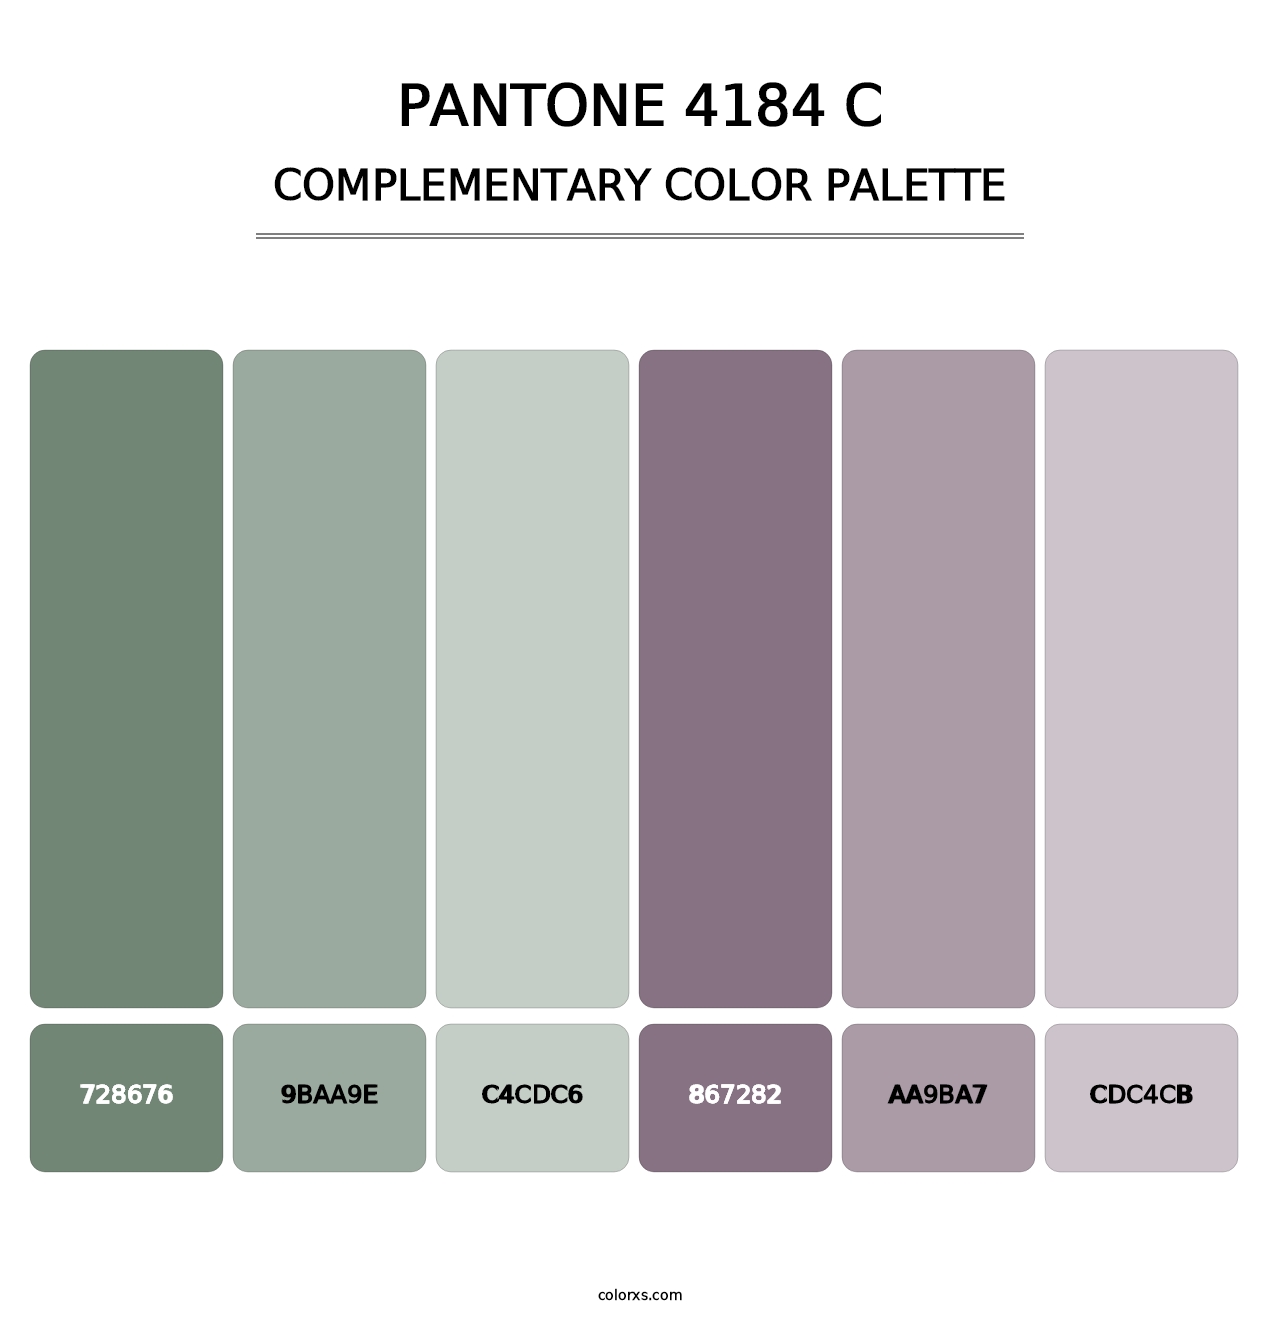 PANTONE 4184 C - Complementary Color Palette